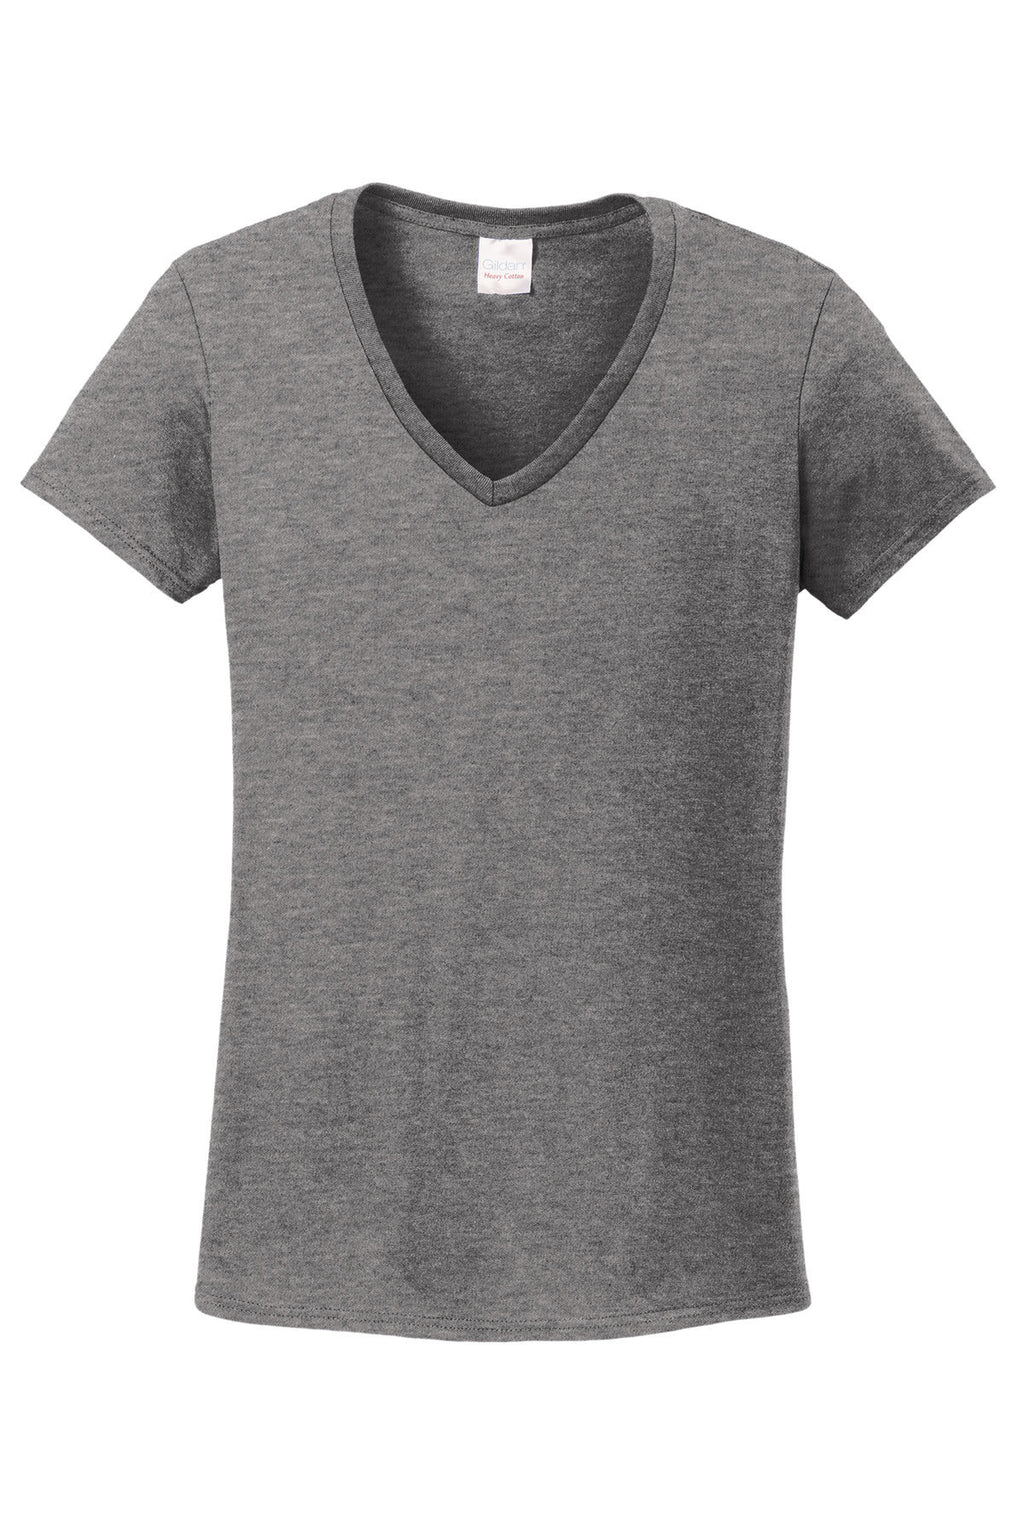 Gildan 100% Cotton Womens V-Neck Short Sleeve Shirts Graphite Heather